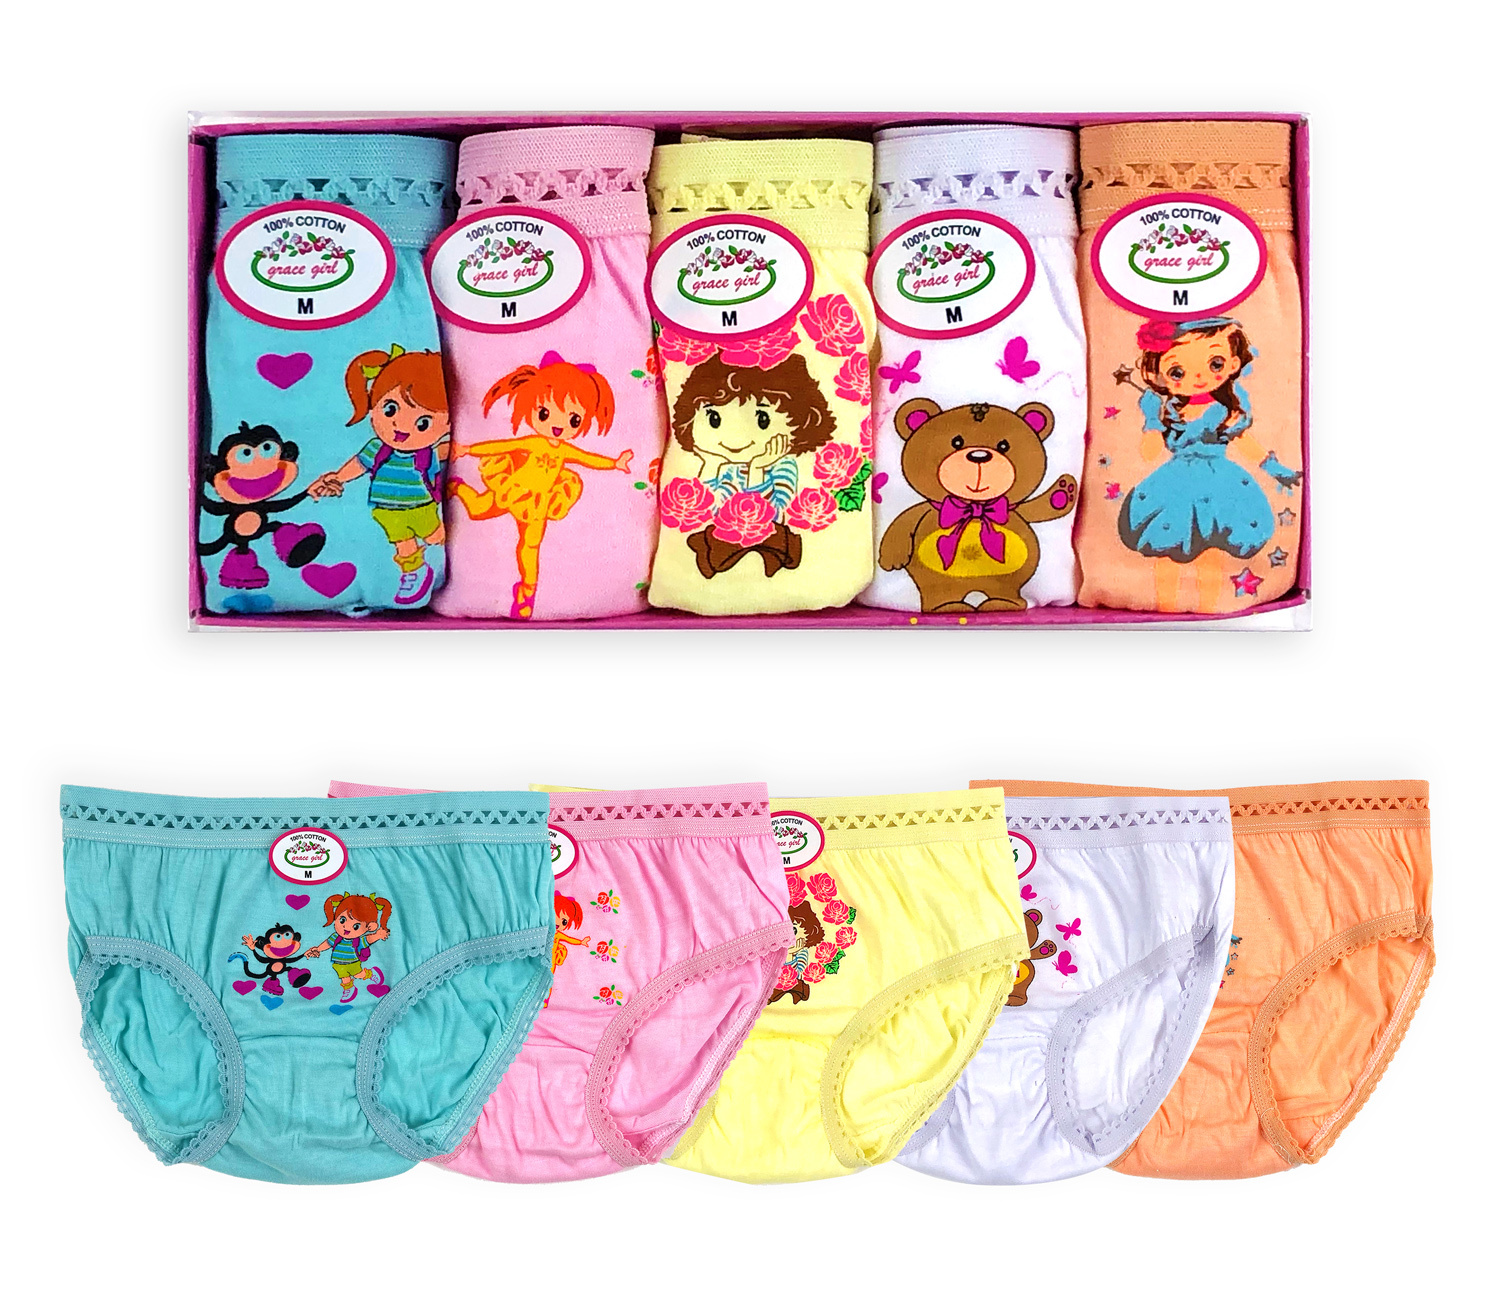 Bulk Girl's Panties - 5 Pack, Assorted Colors, Size 14 - DollarDays